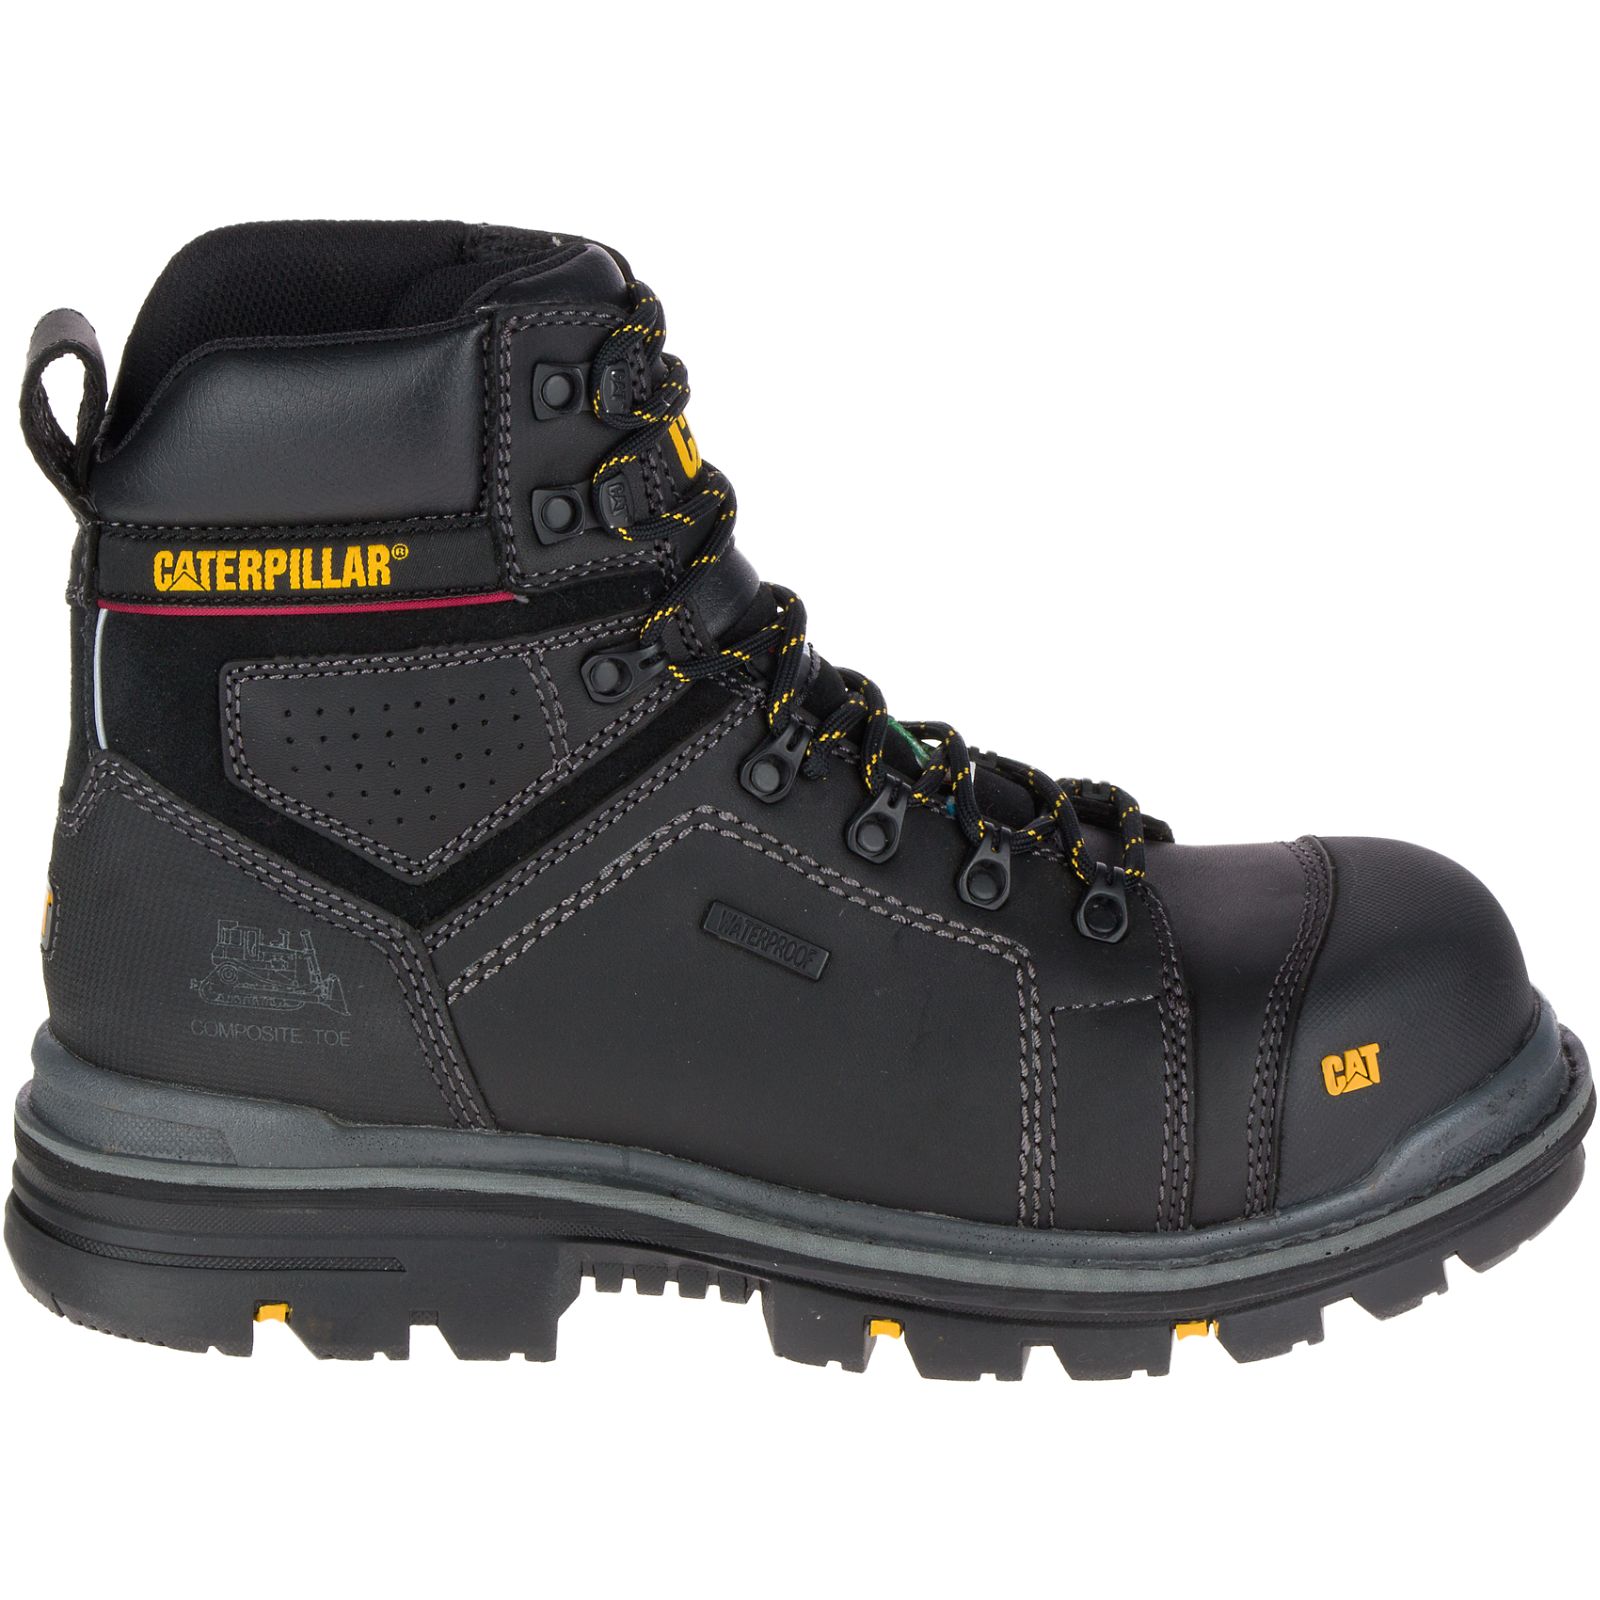 Caterpillar Boots Online - Caterpillar Hauler 6" Waterproof Composite Toe Mens Work Boots Black (471039-NEV)